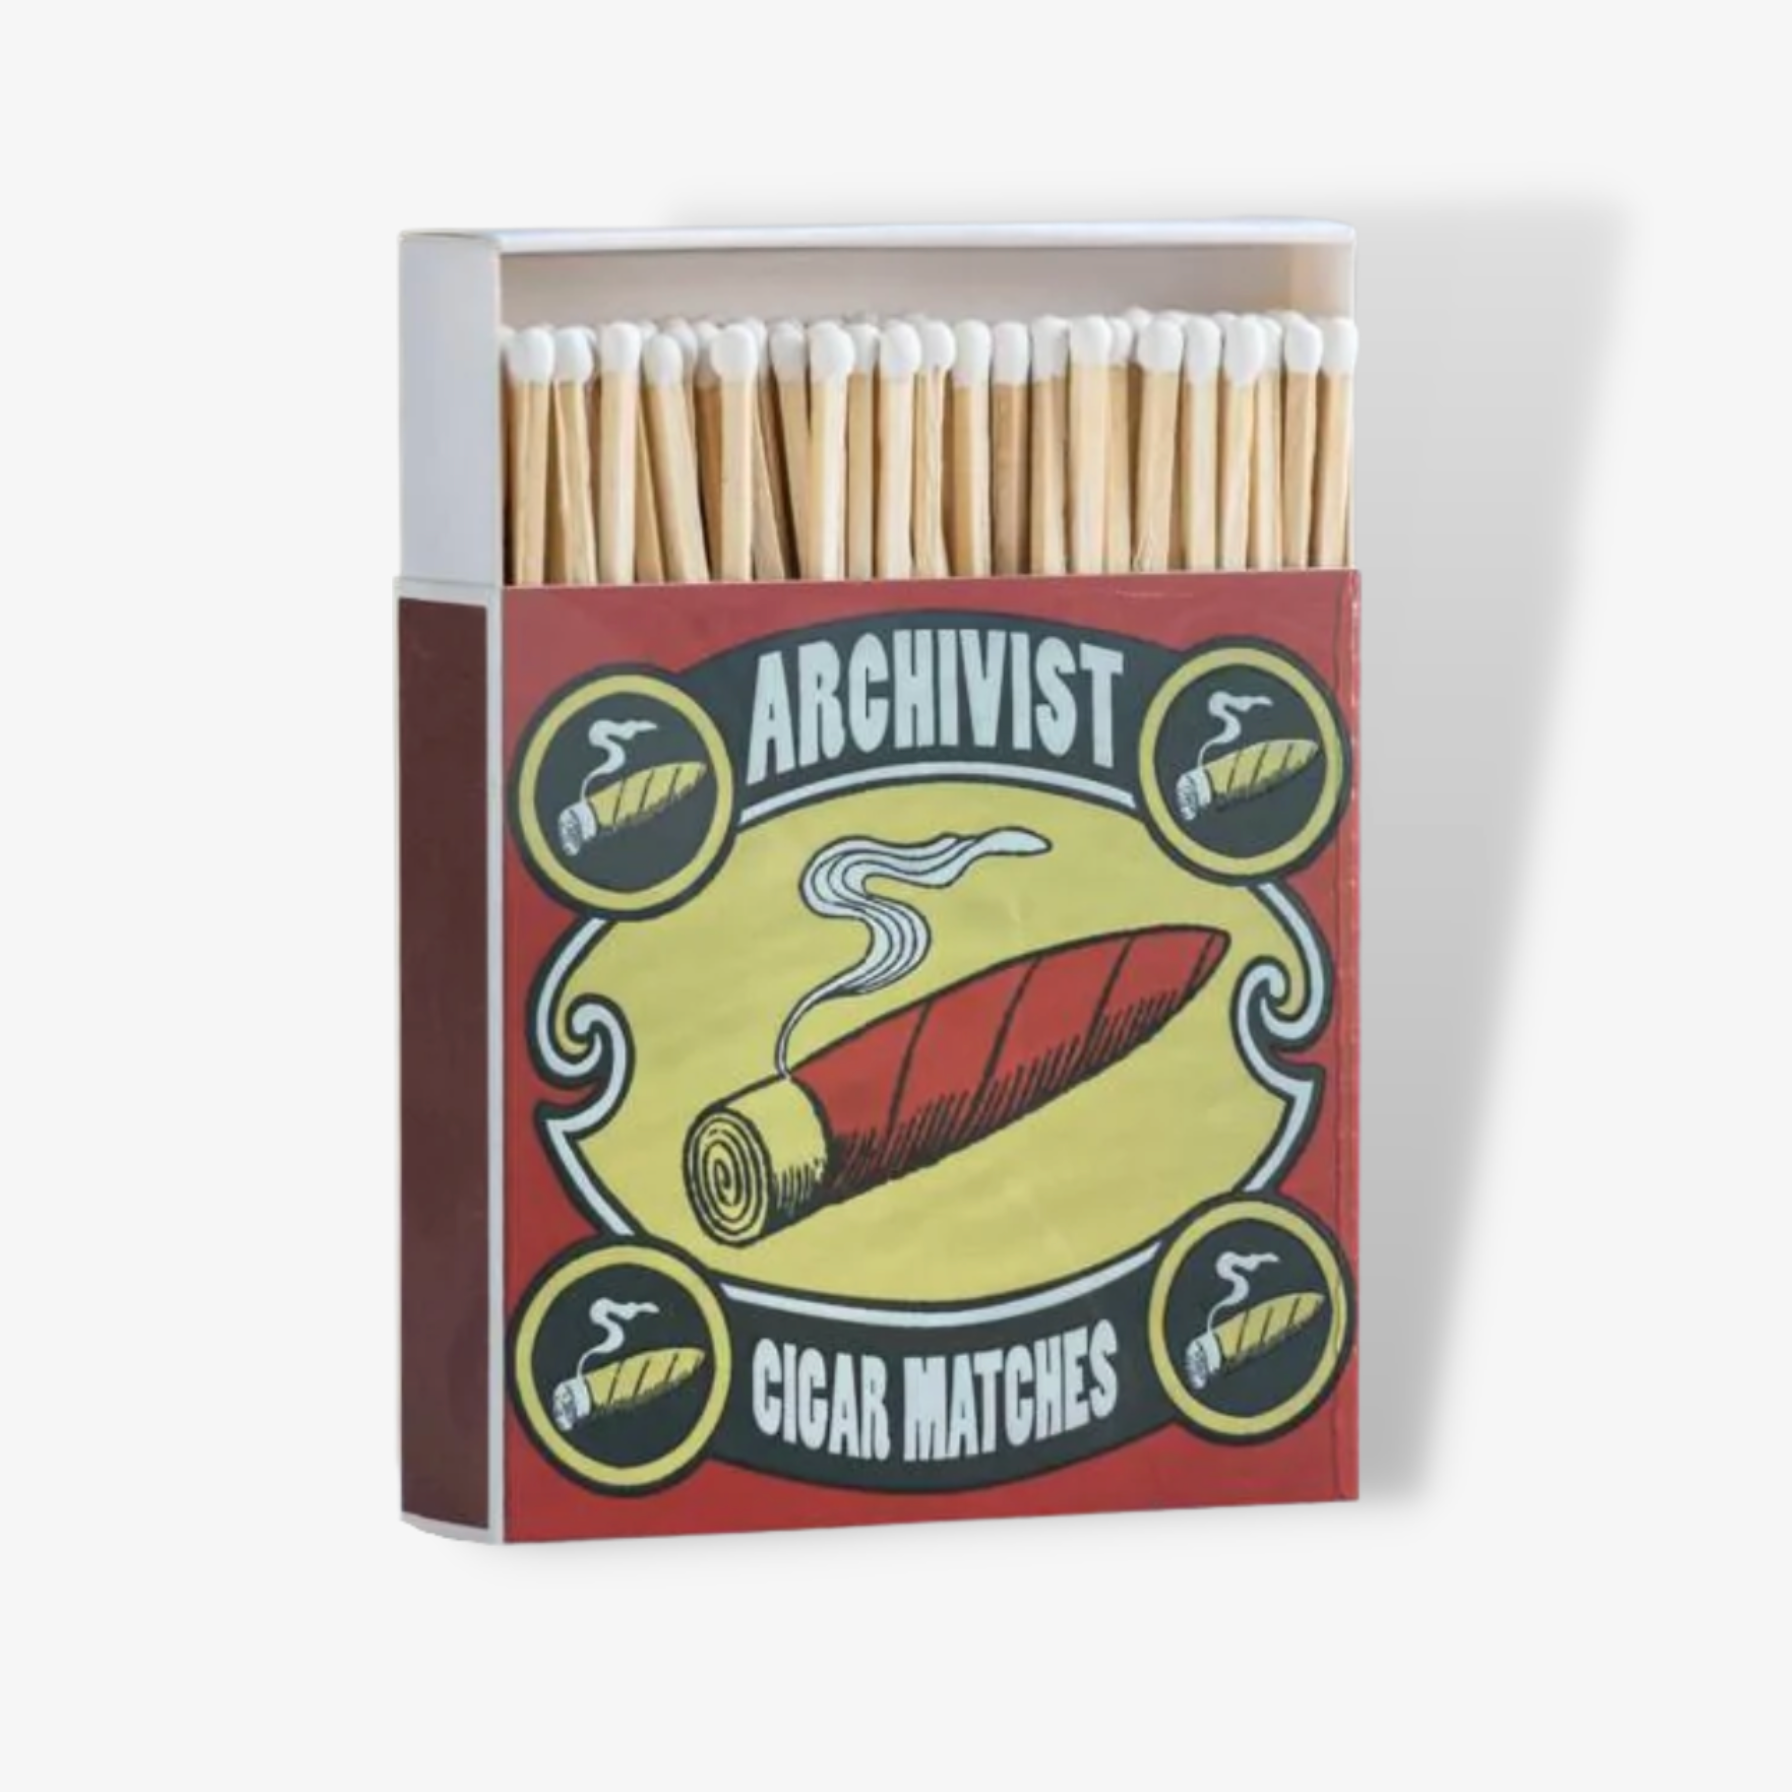 Extra Long Cigar Matches